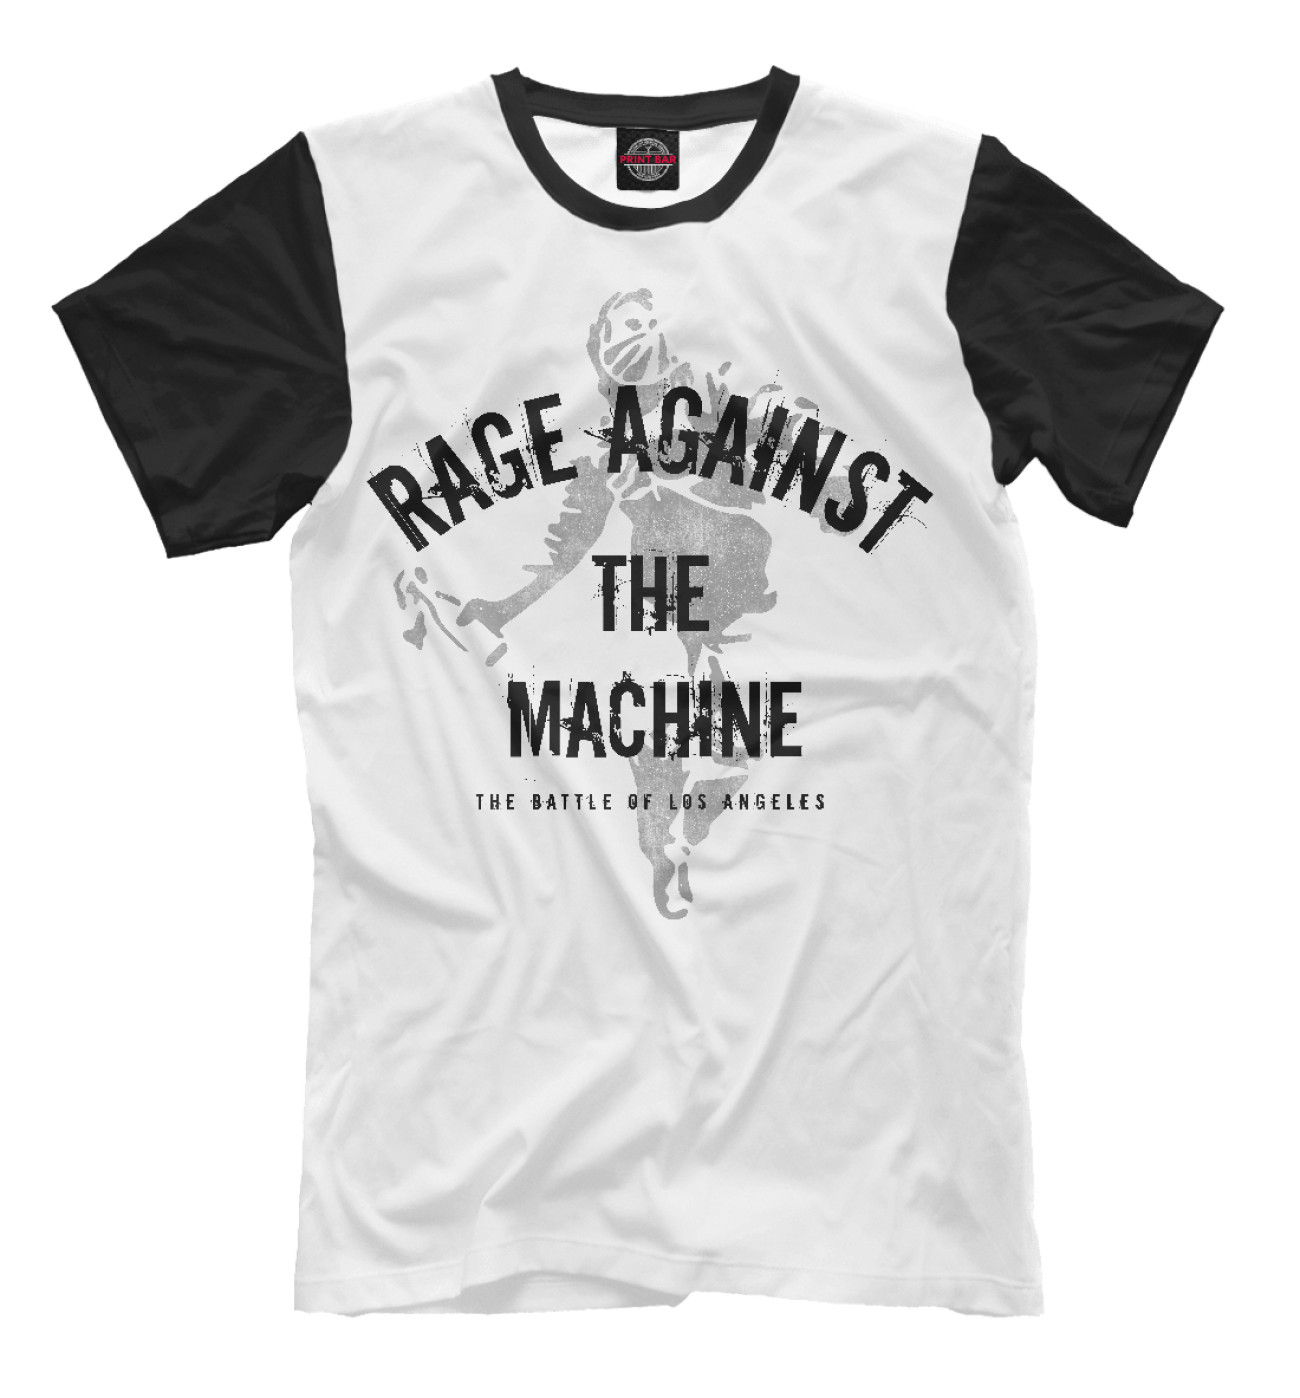 Мужская Футболка Rage Against the Machine, артикул: RAM-675767-fut-2